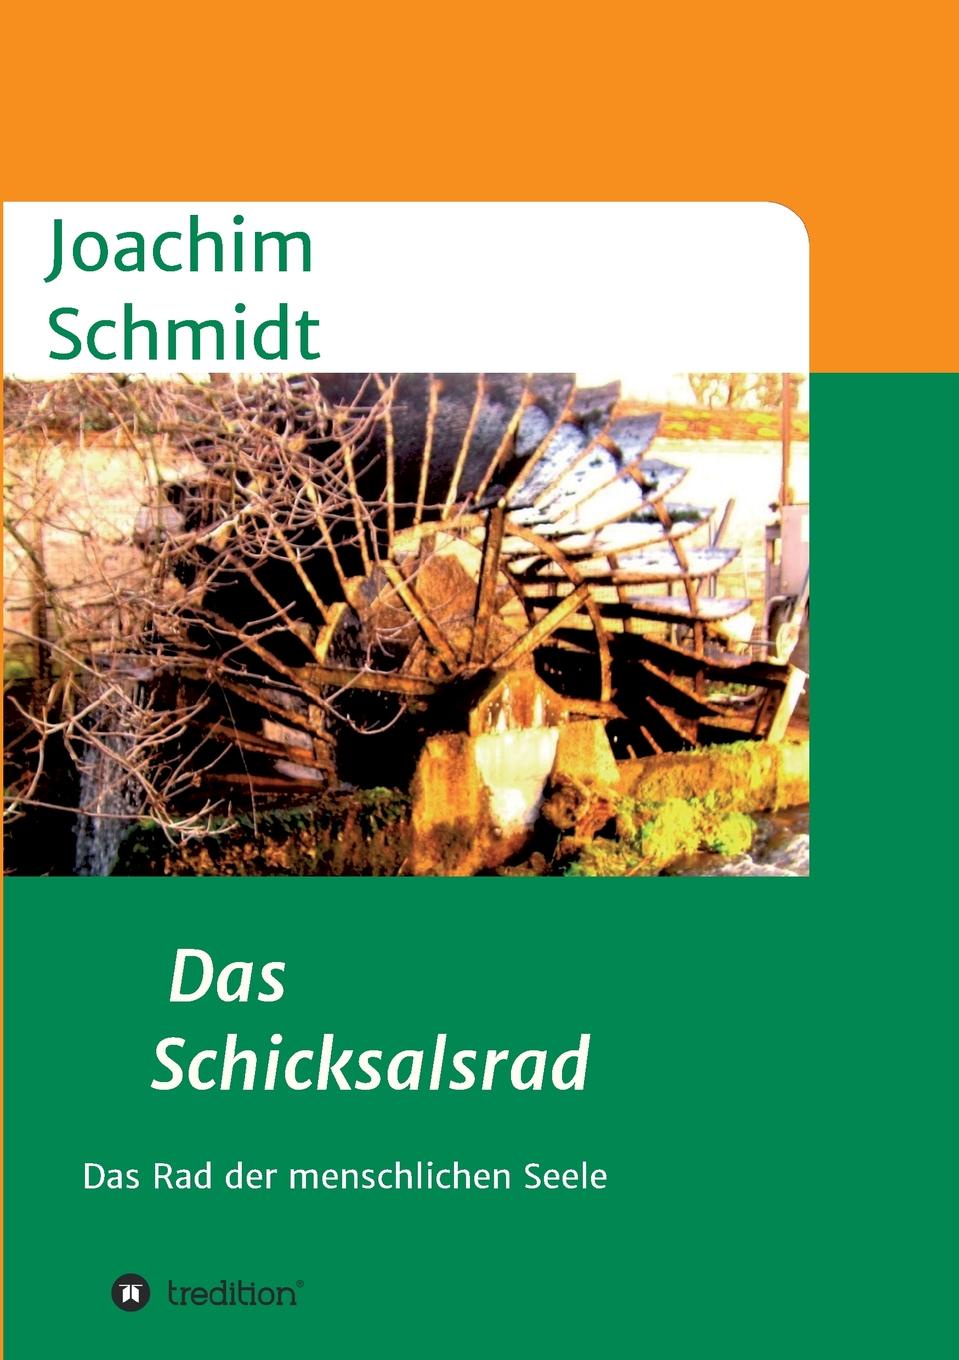 Joachim Schmidt Das Schicksalsrad